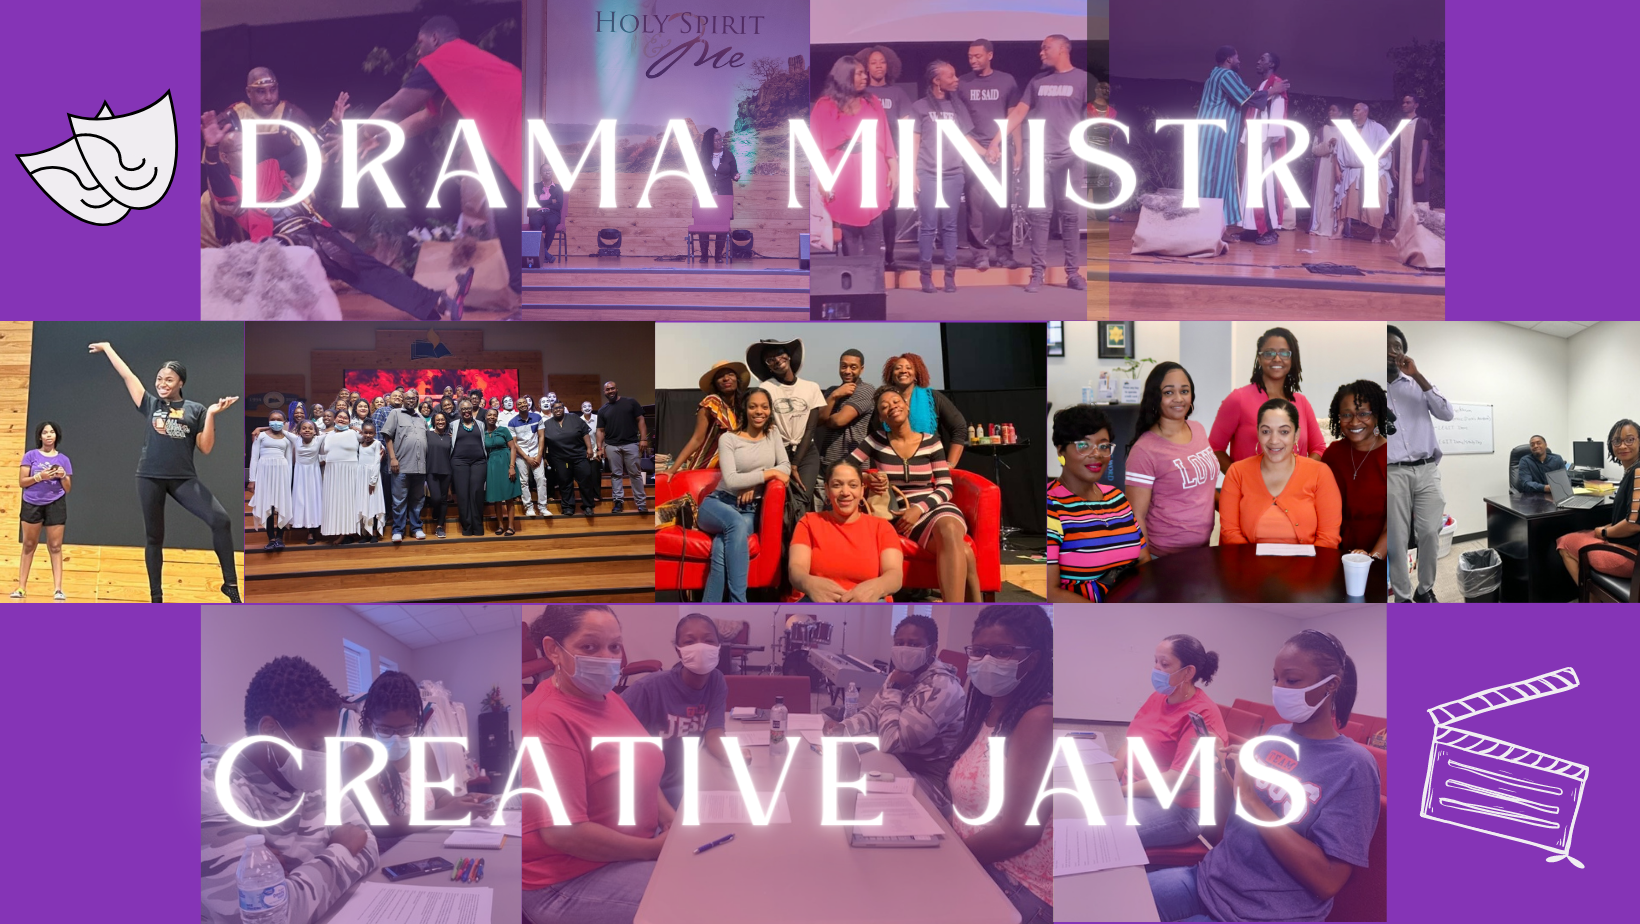 CREATIVE JAMS DRAMA MINISTRY FACEBOOK GROUP head image